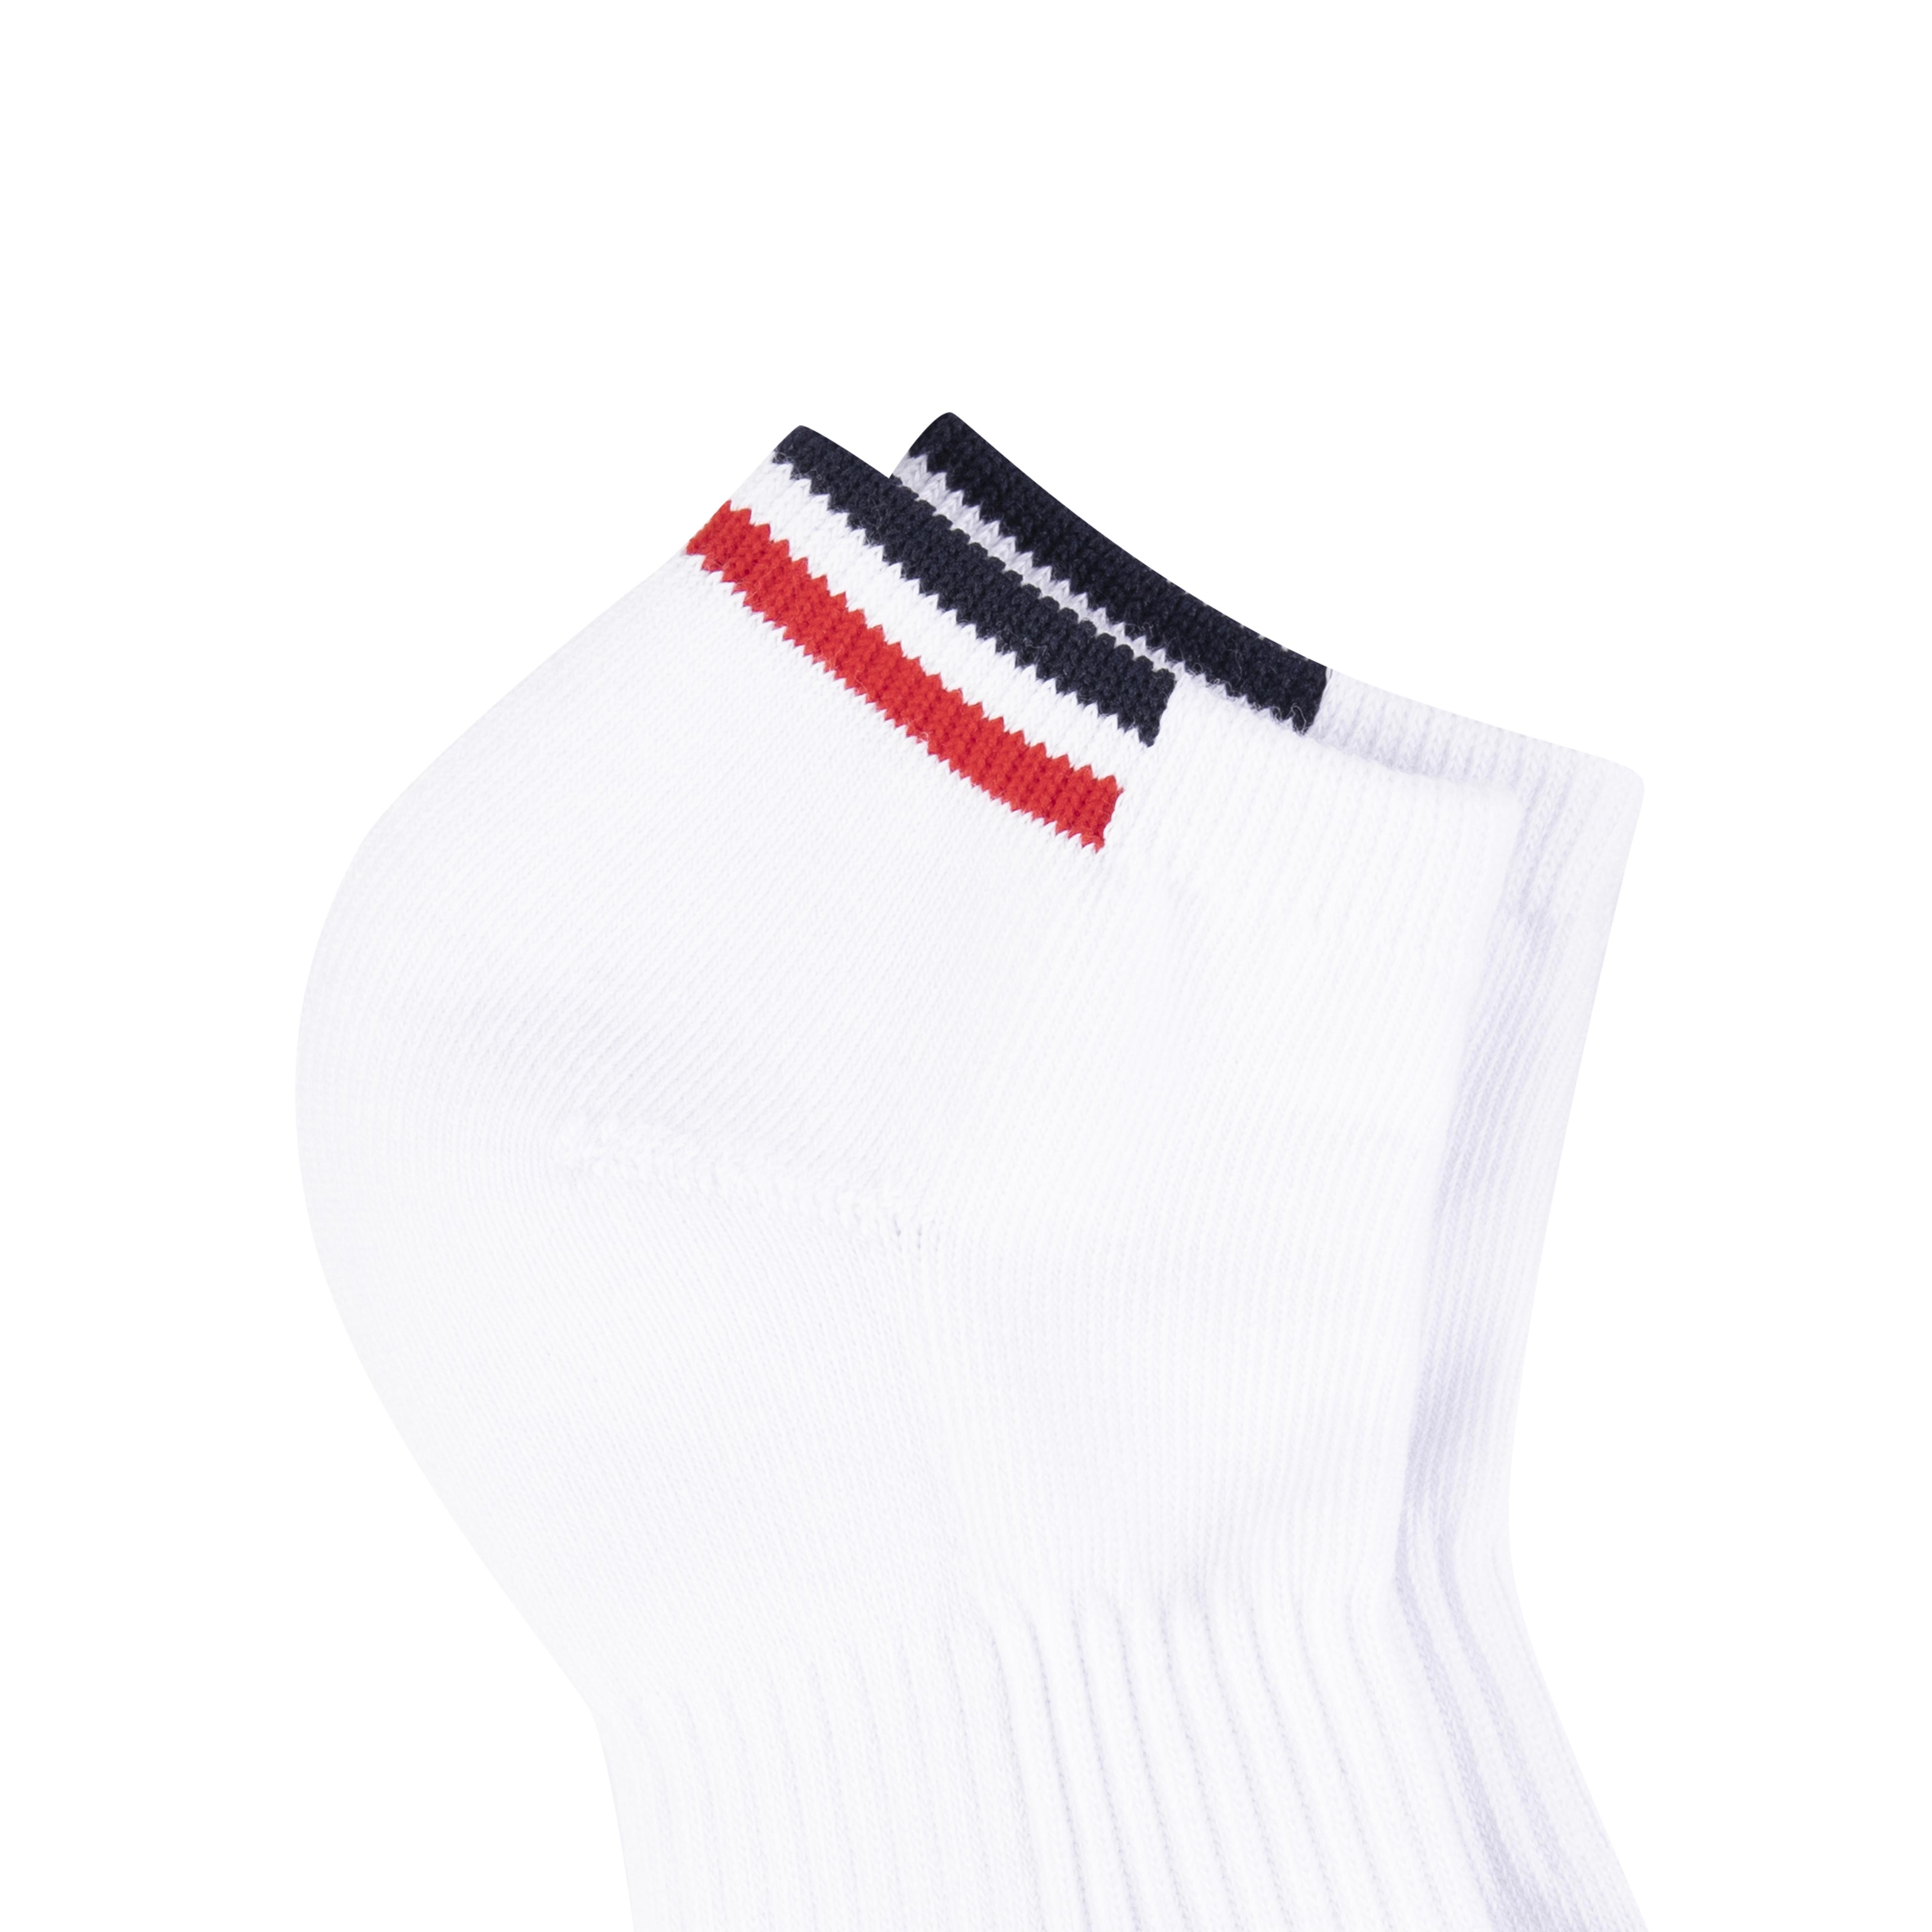 Low-cut Socks